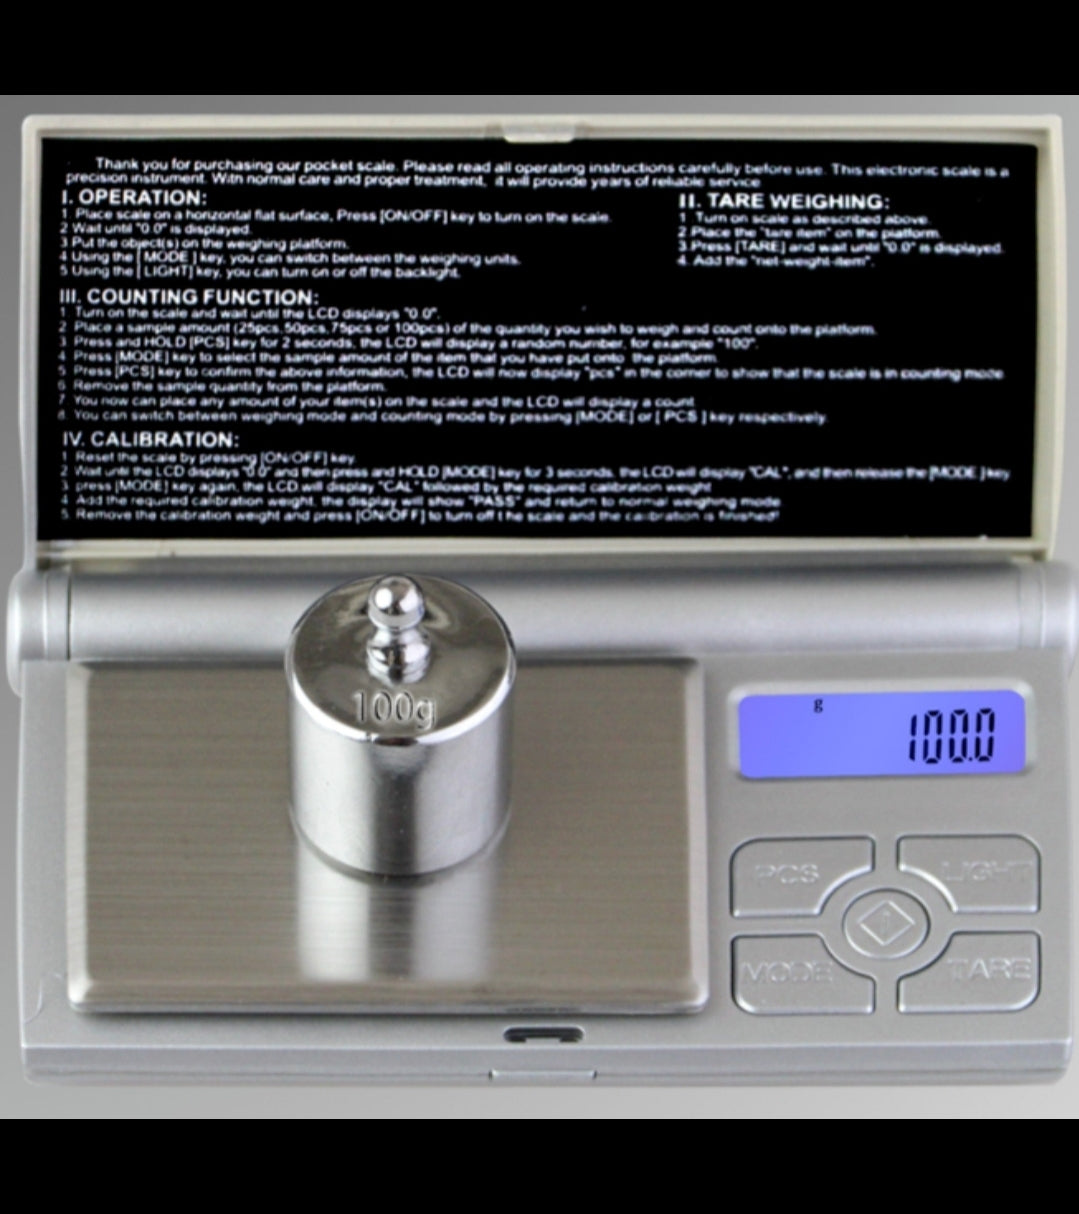 Fuzion Global FS-100 Digital Pocket Scale 100g x 0.01g